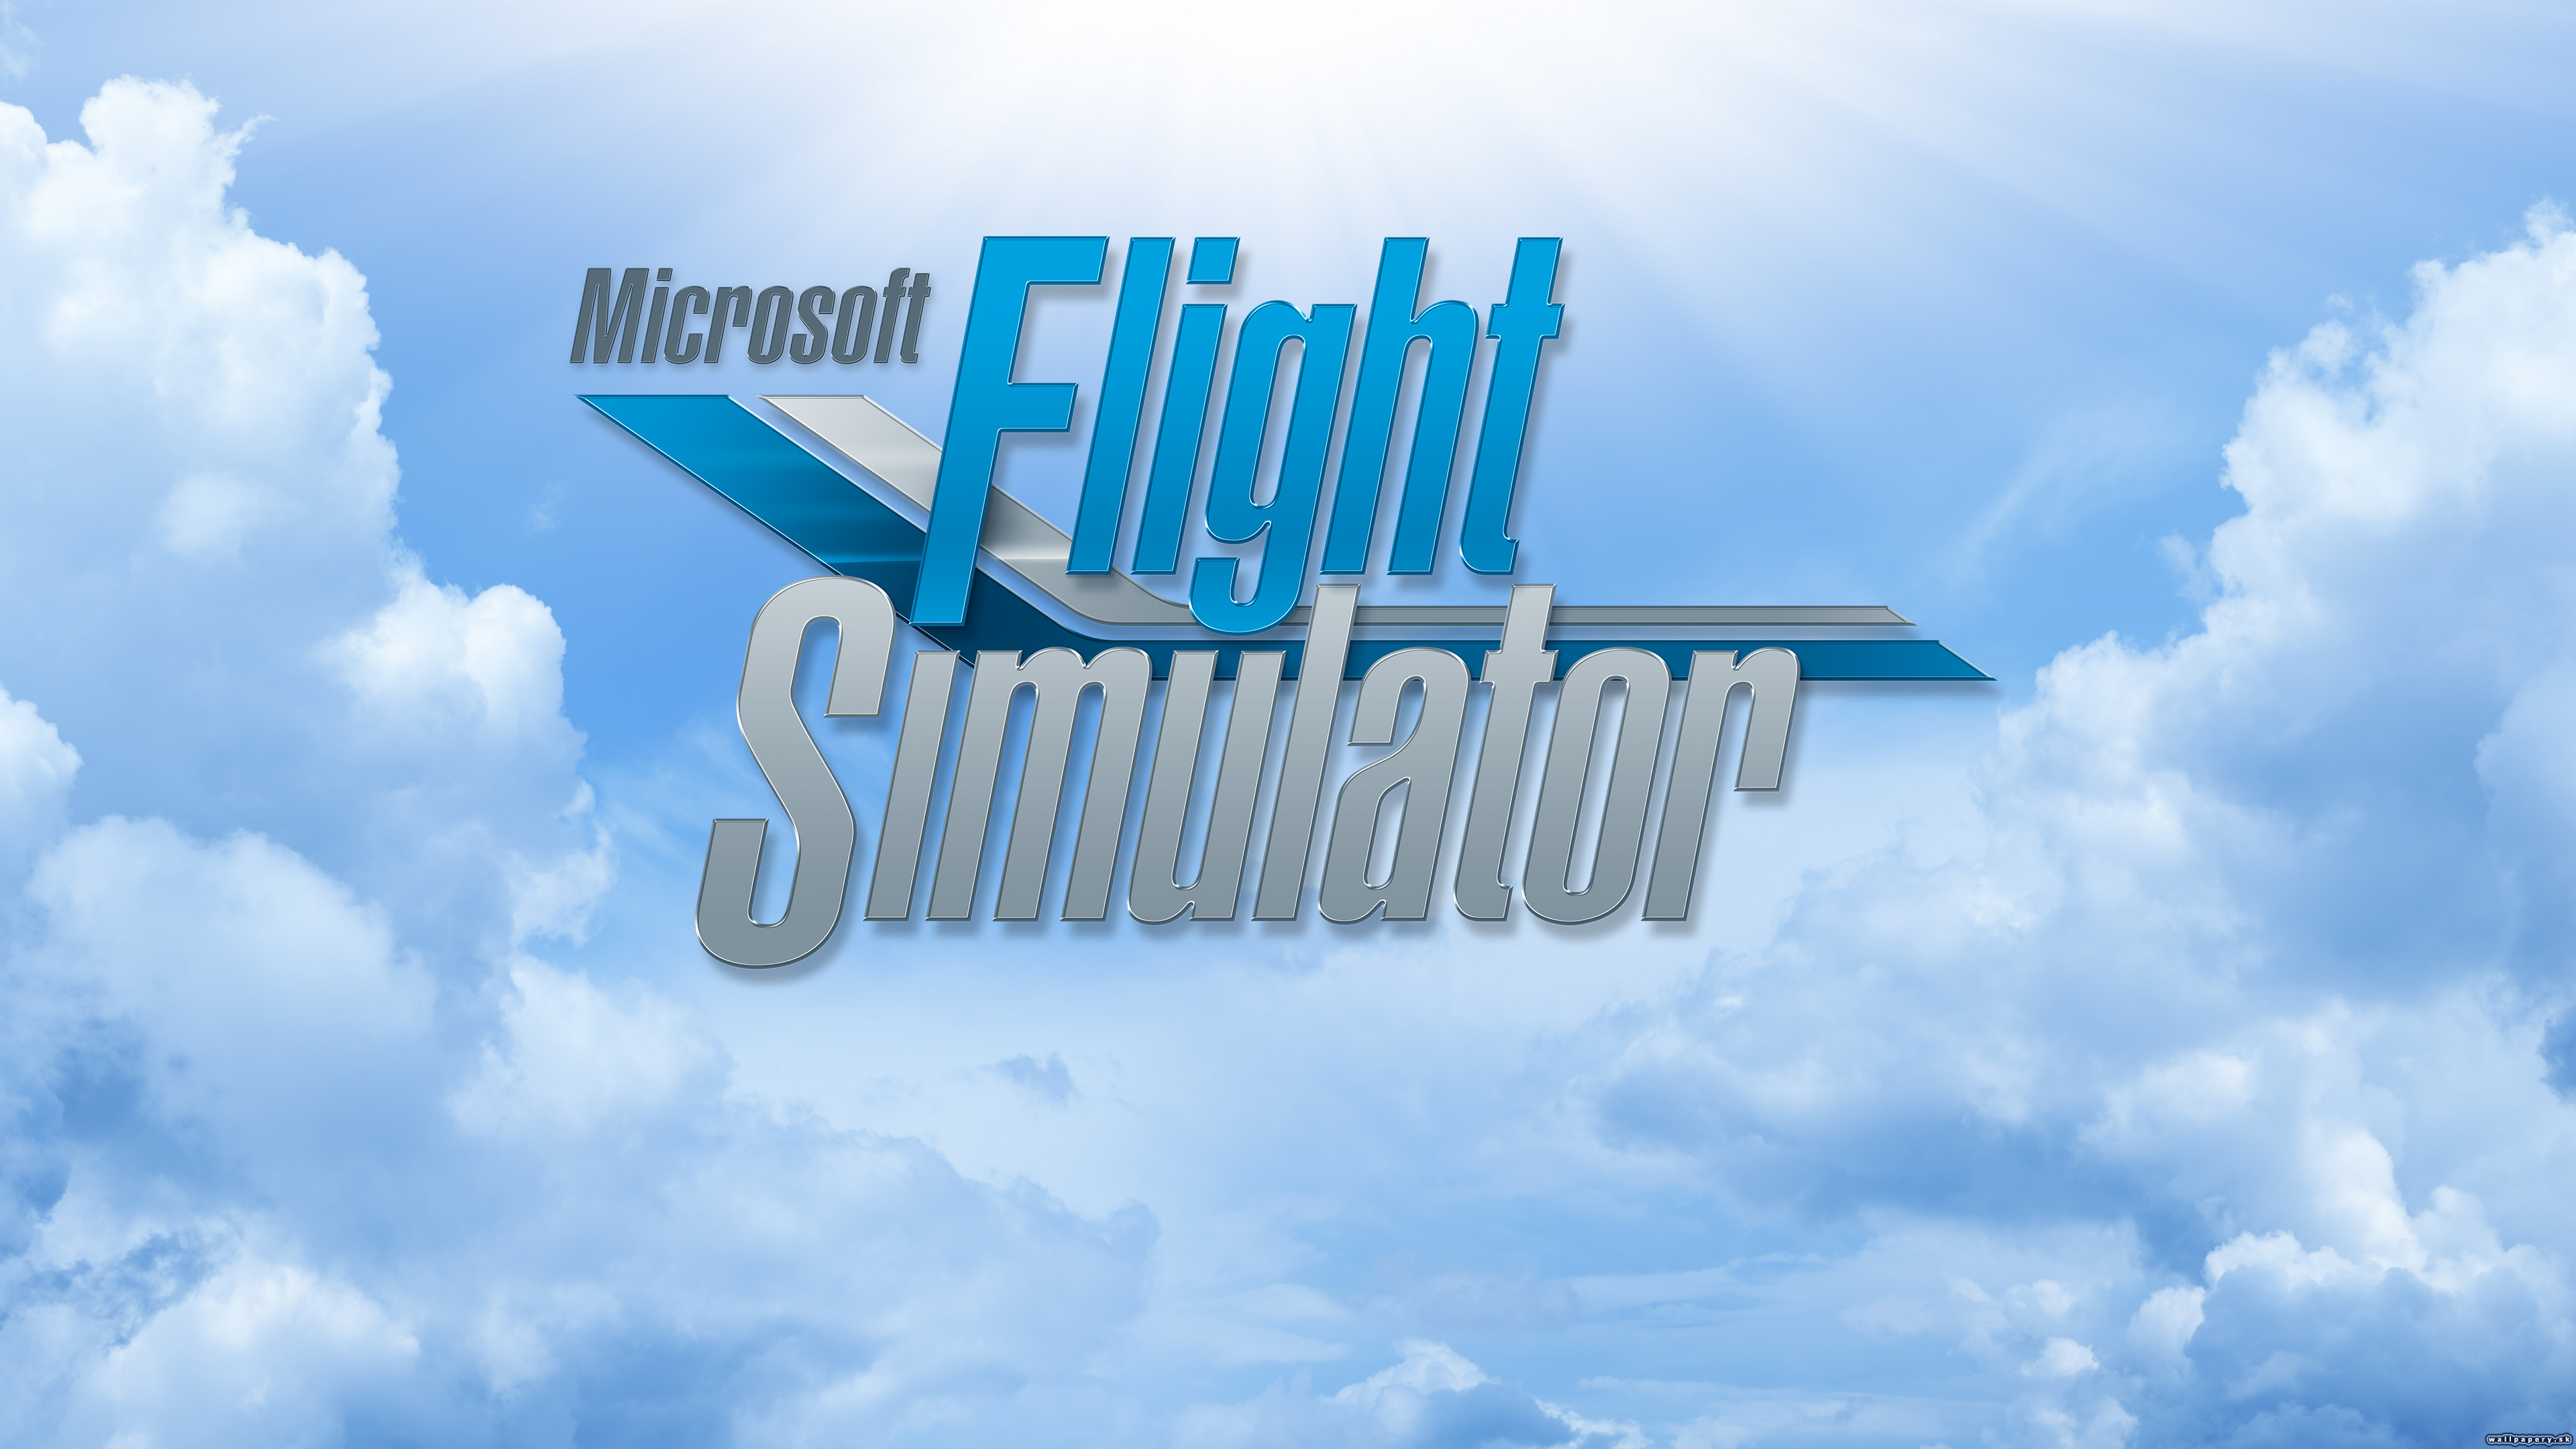 Microsoft Flight Simulator - wallpaper 2 | ABCgames.sk